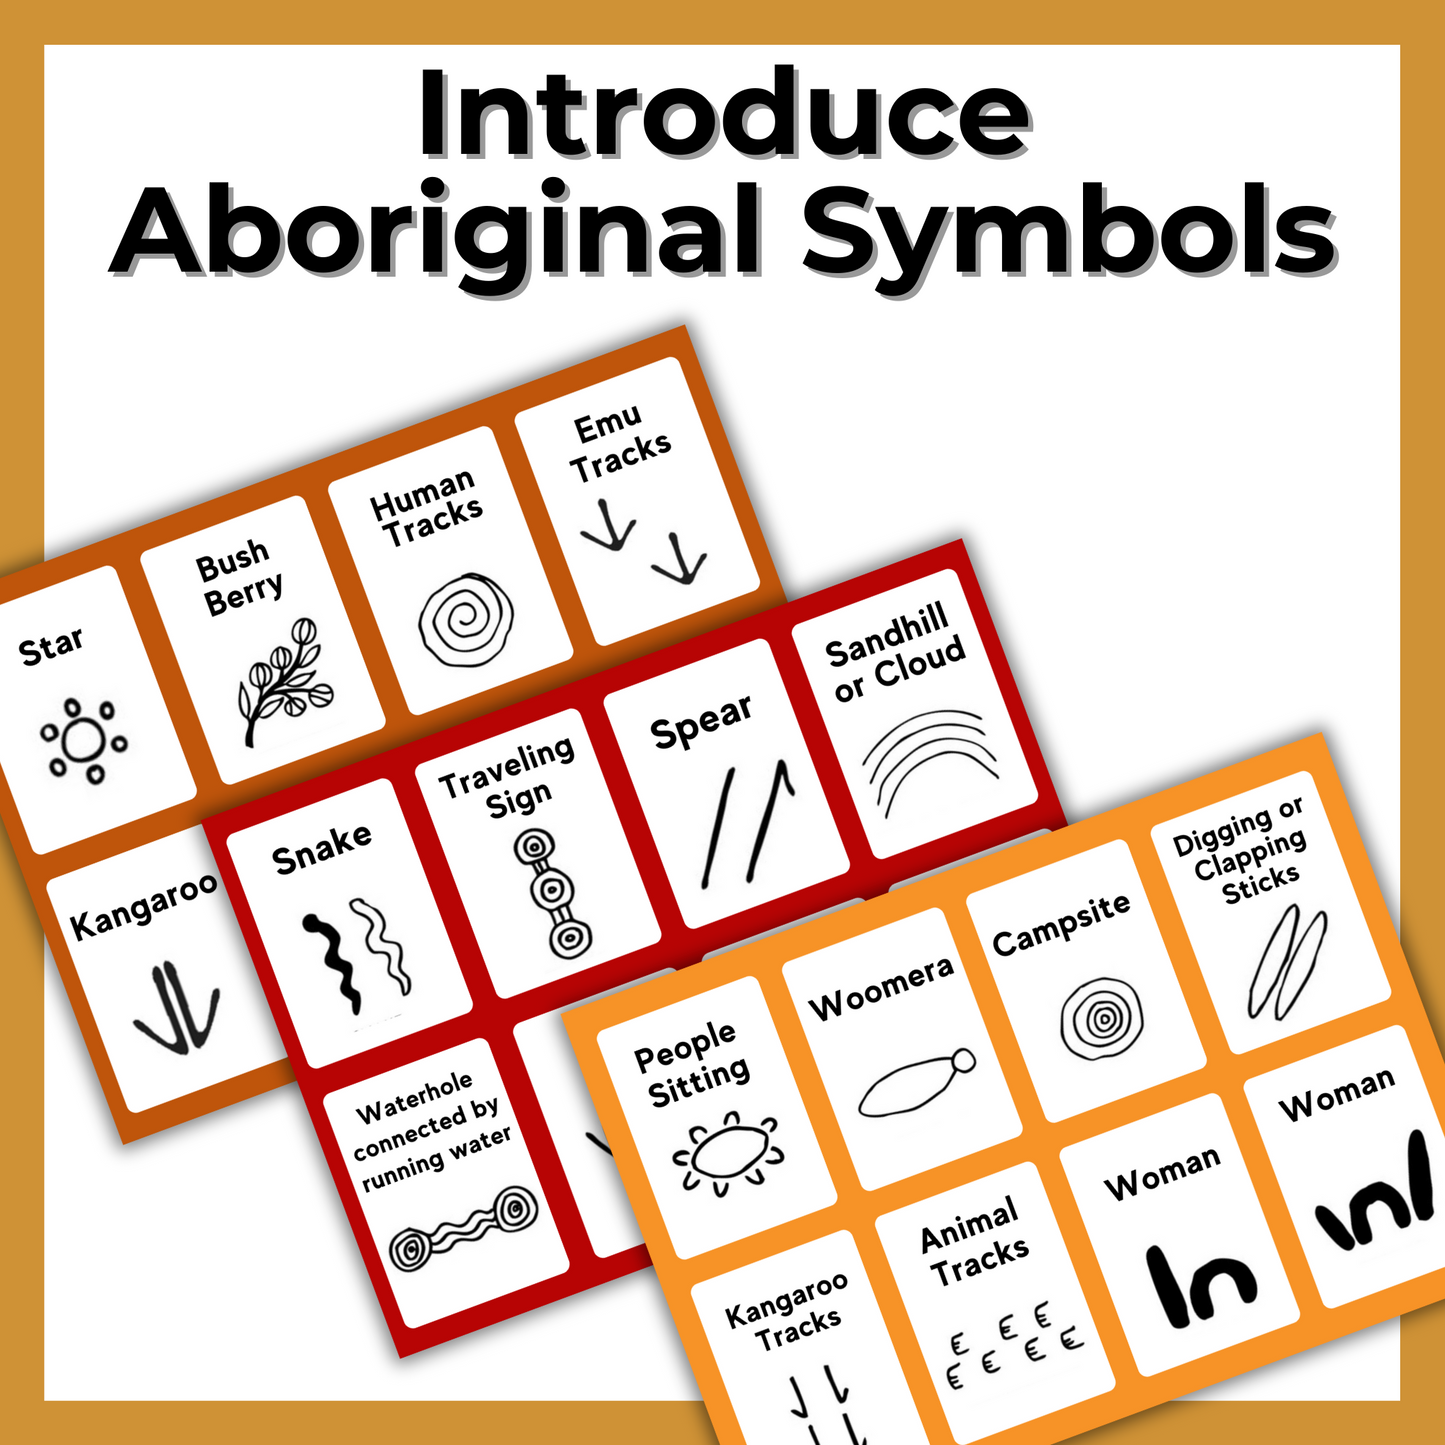 Aboriginal Symbols Flash Cards